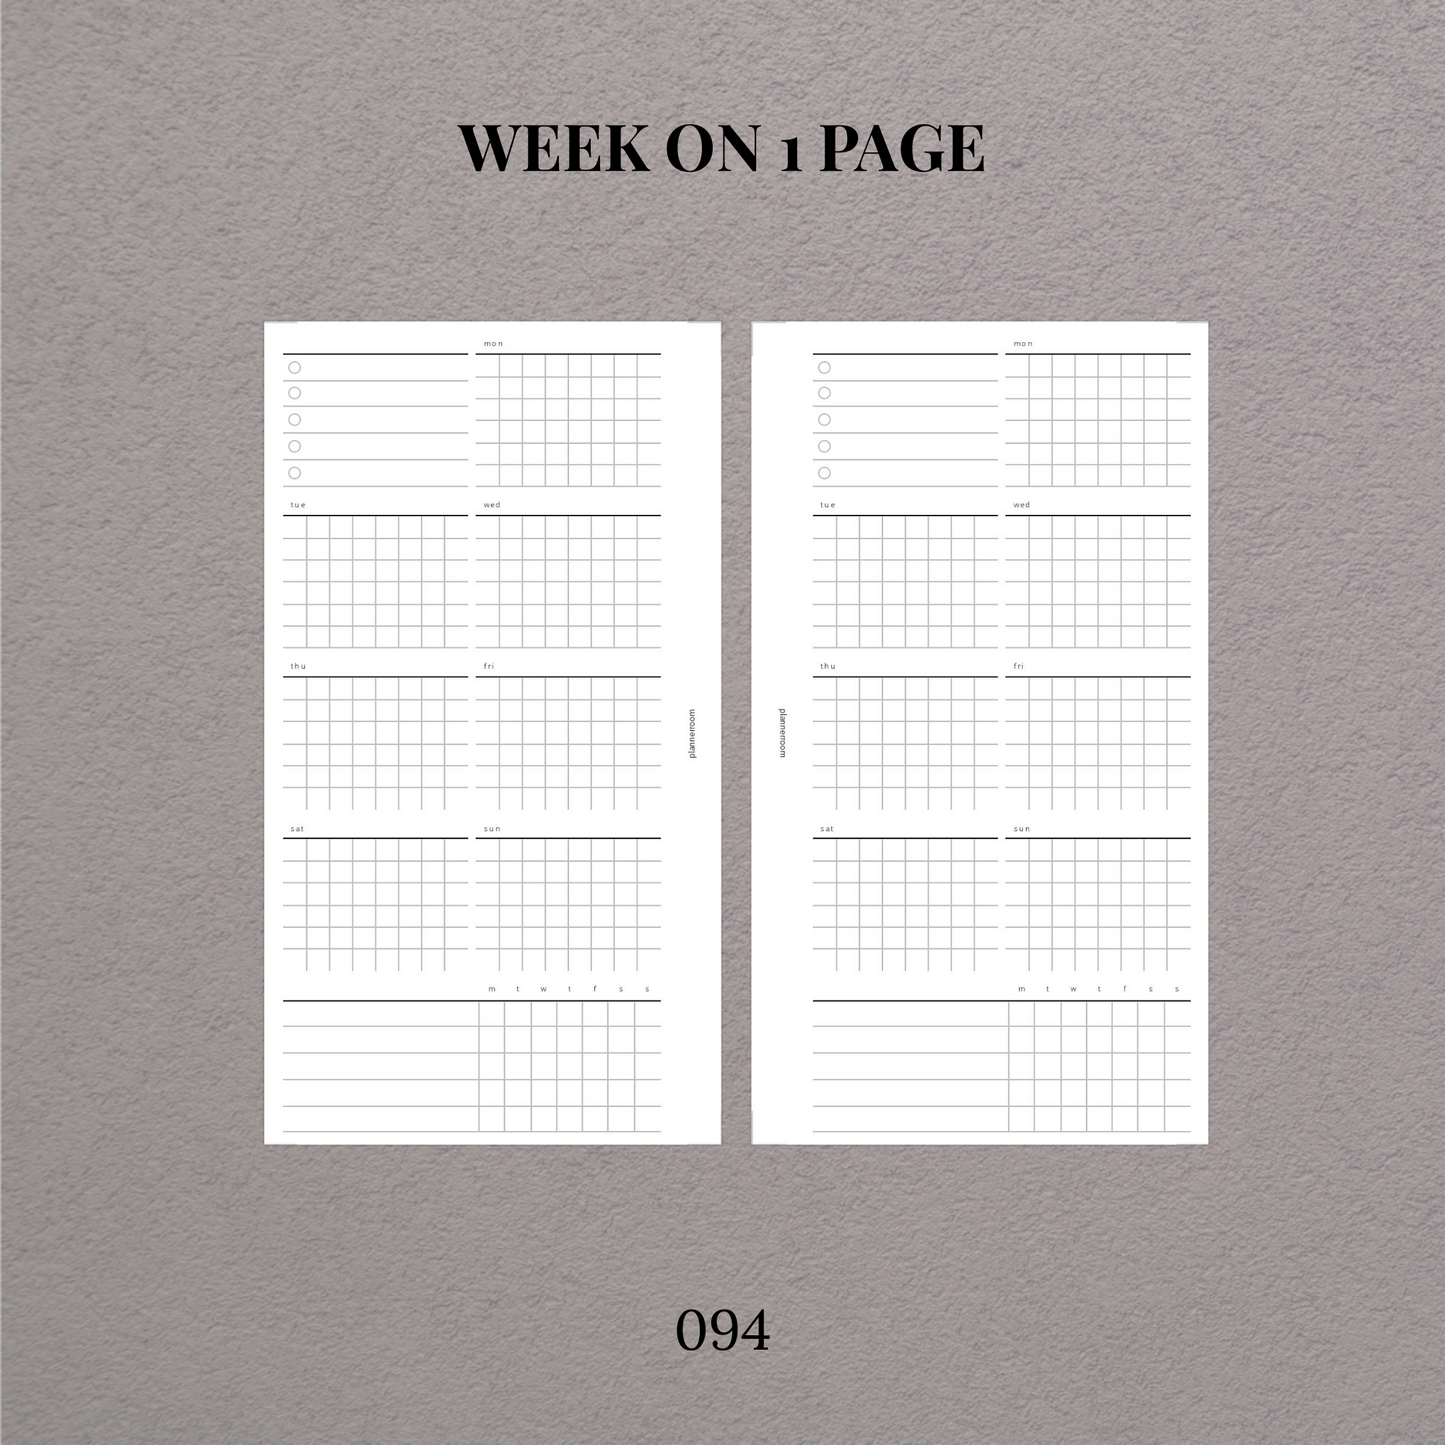 Week on 1 page planner - 094